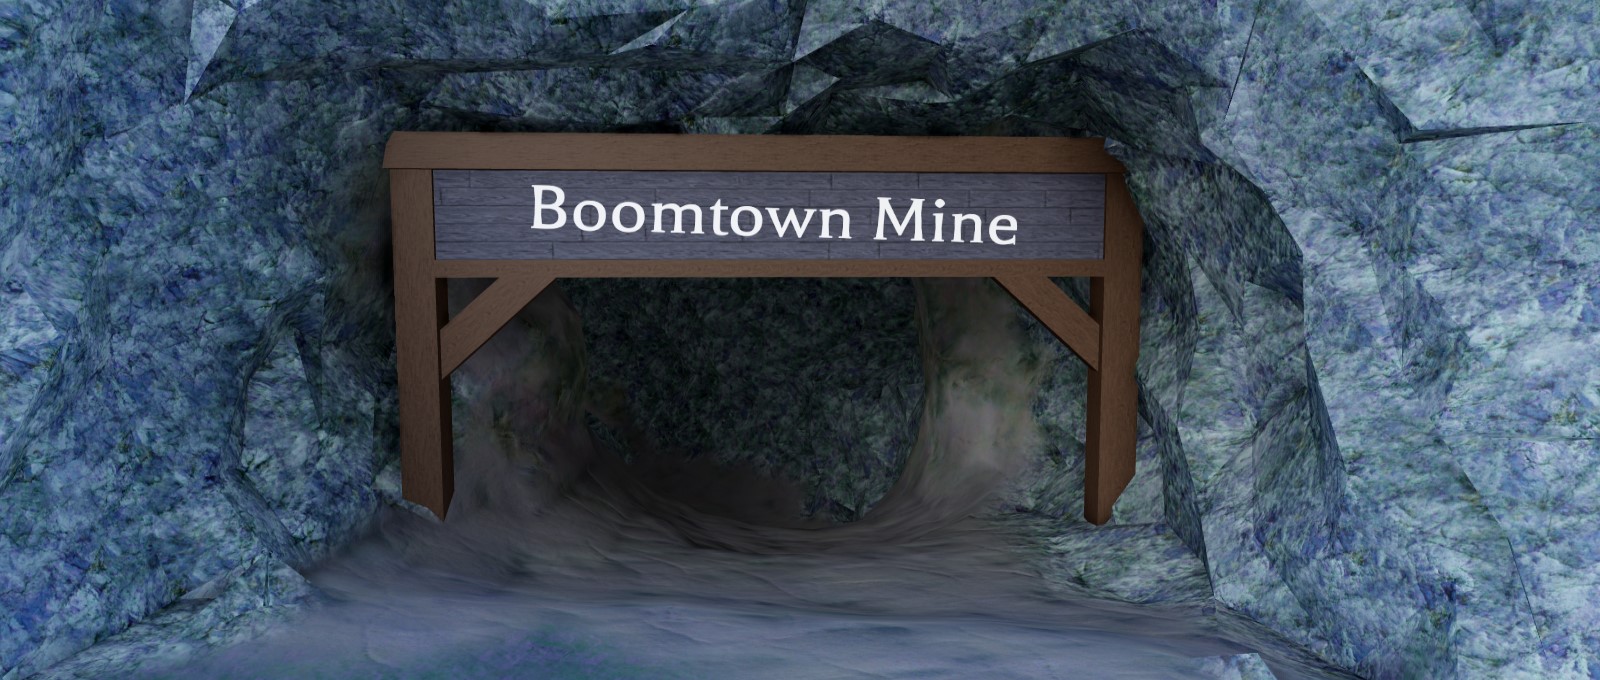 BoomtownMine.jpg